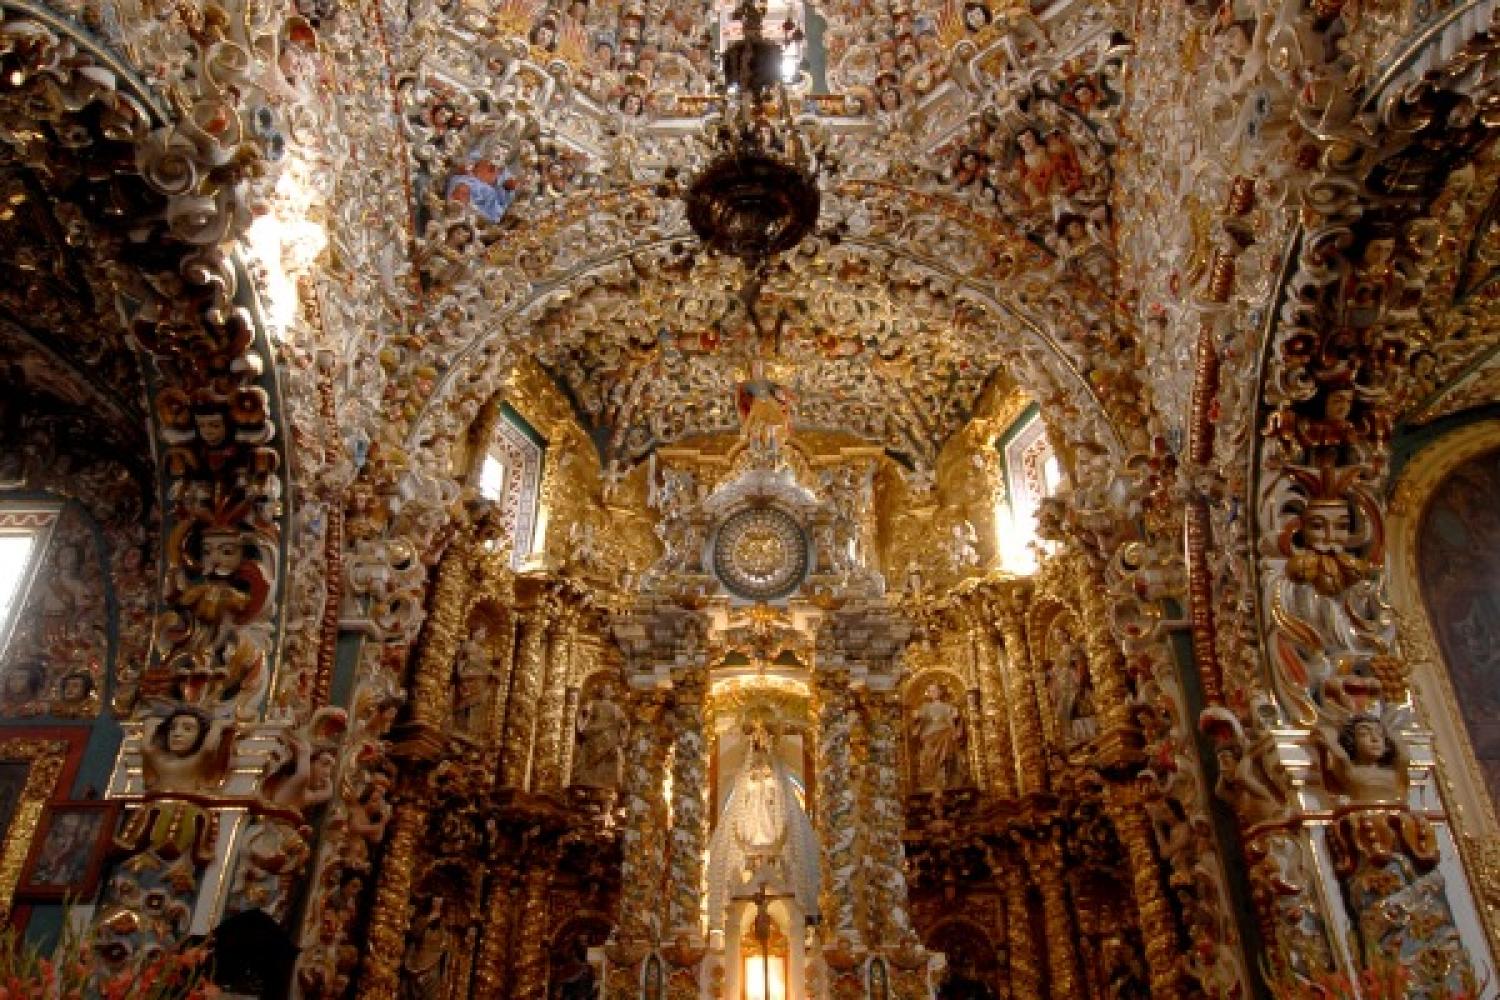 Interior of the Ornate Templo de Santa Maria Tonantzintla